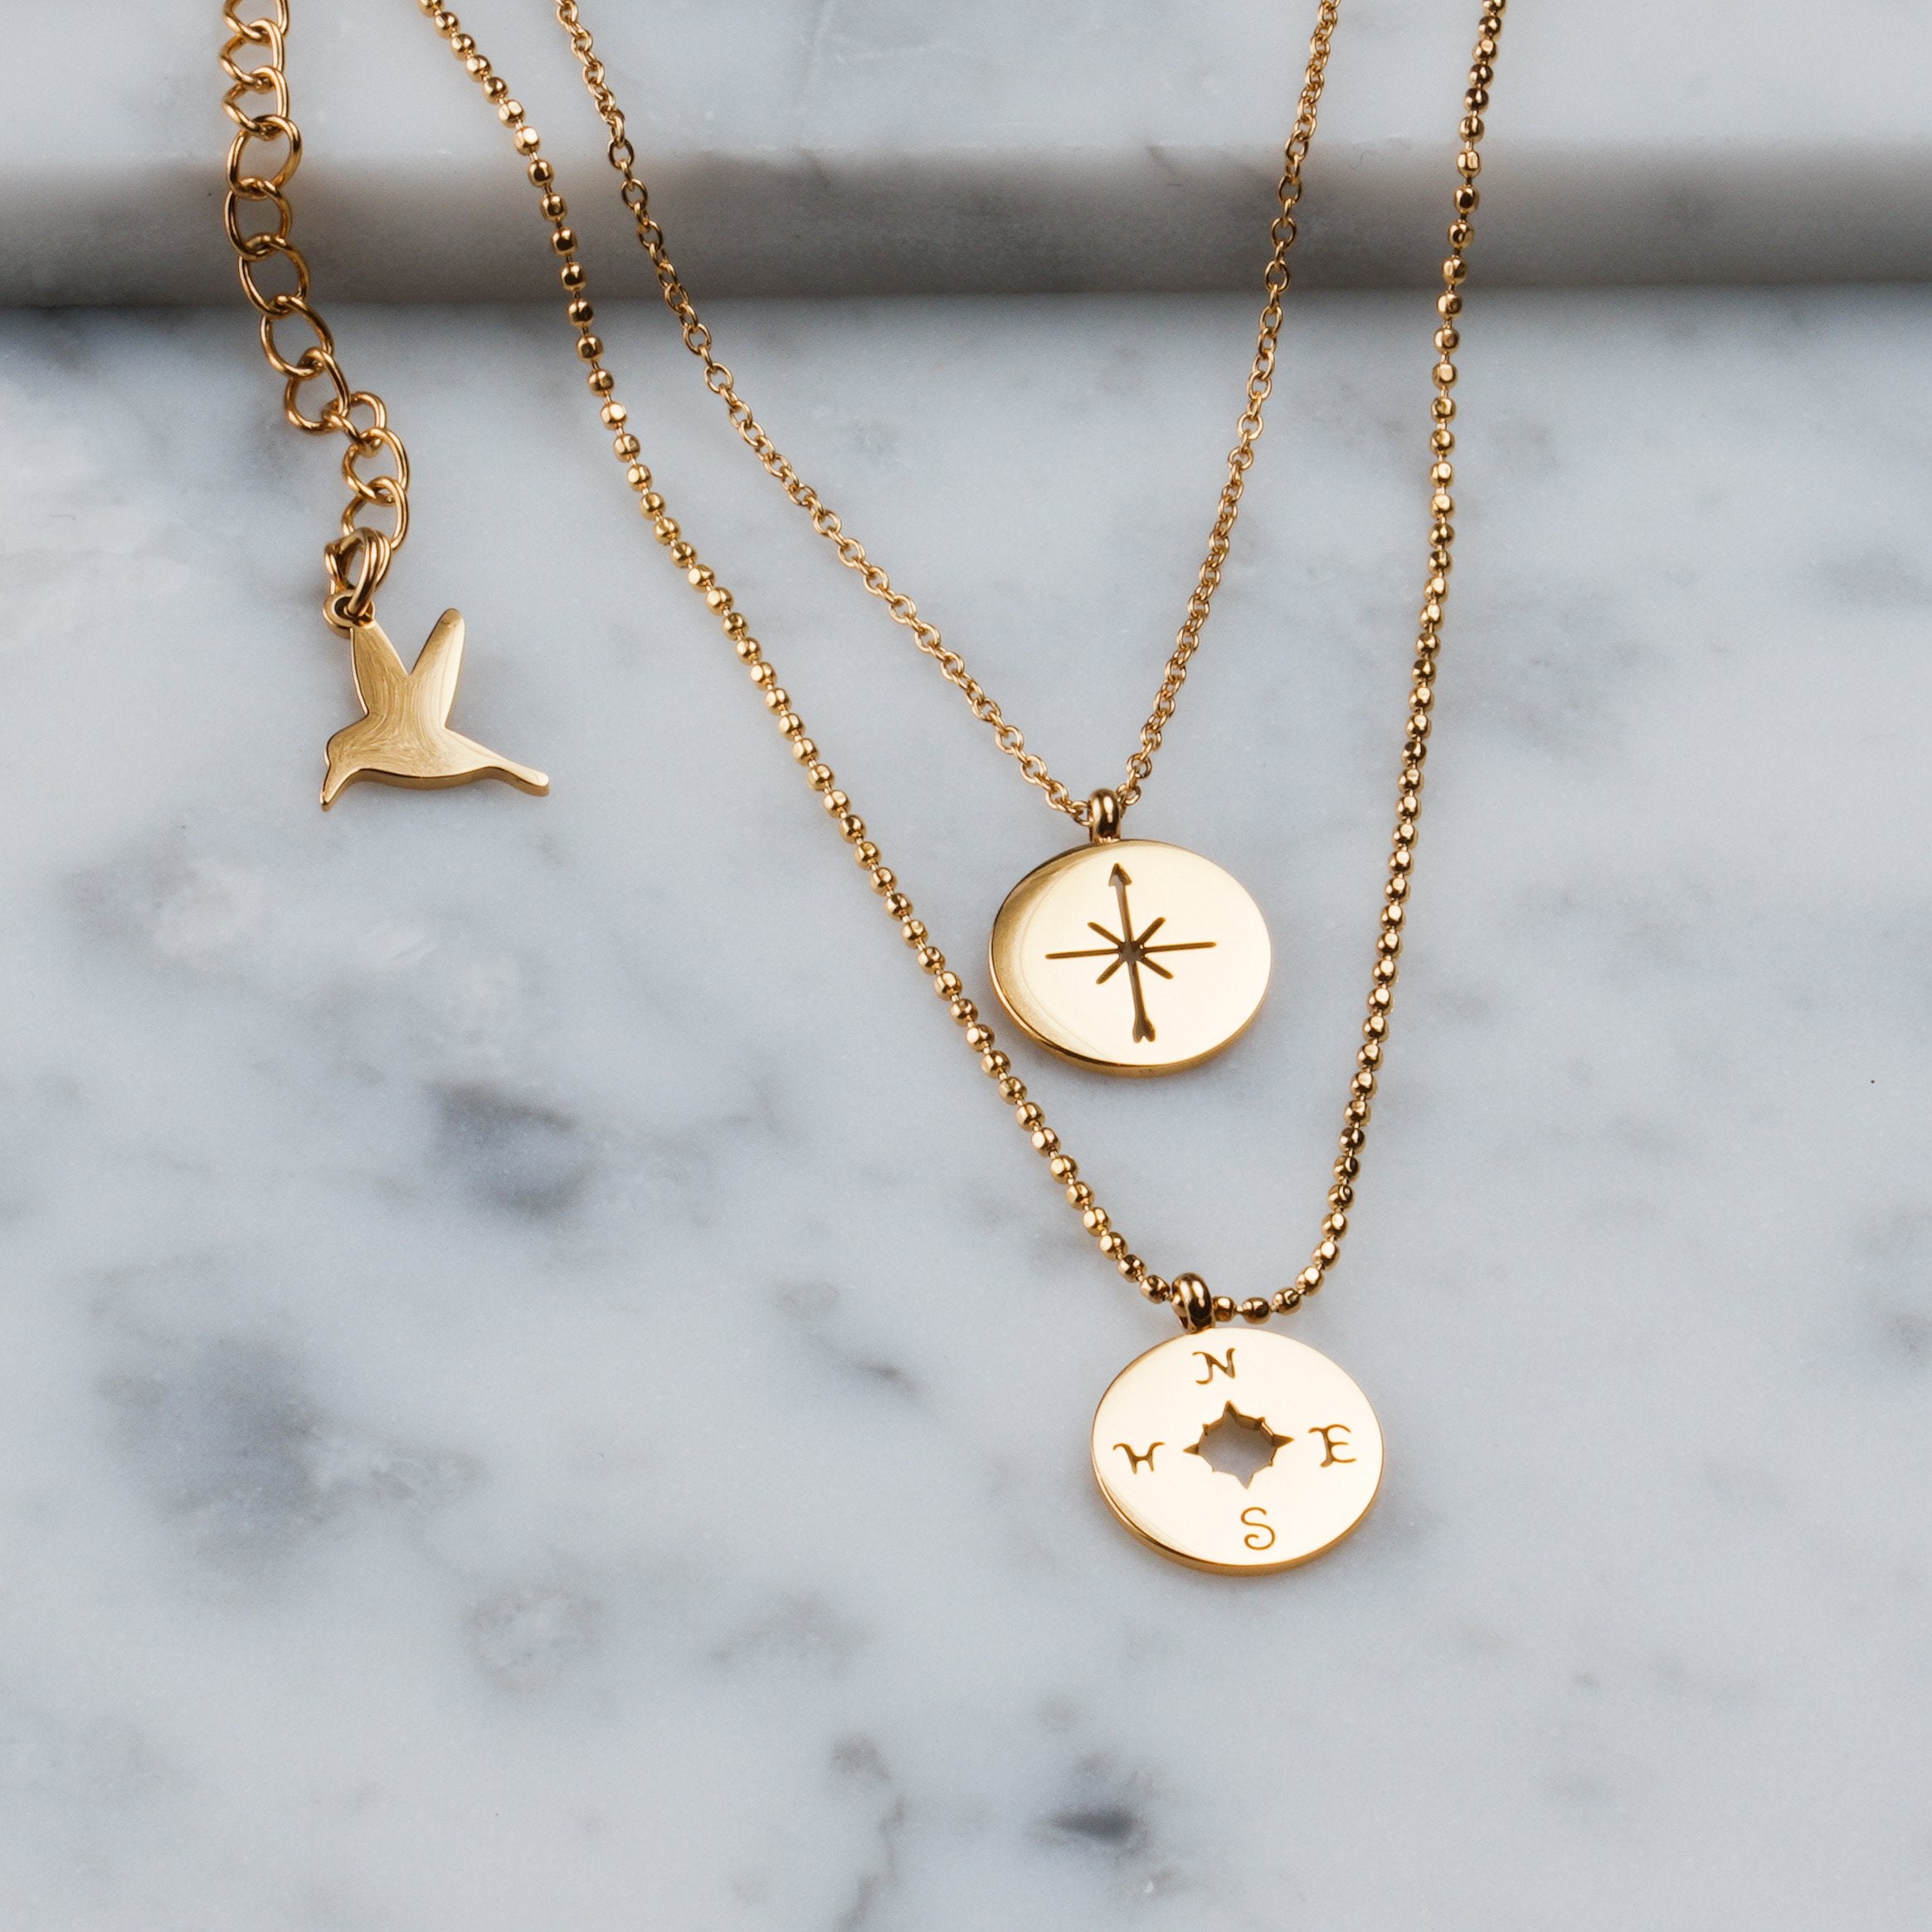 Signature double necklace - Shiny gold compass